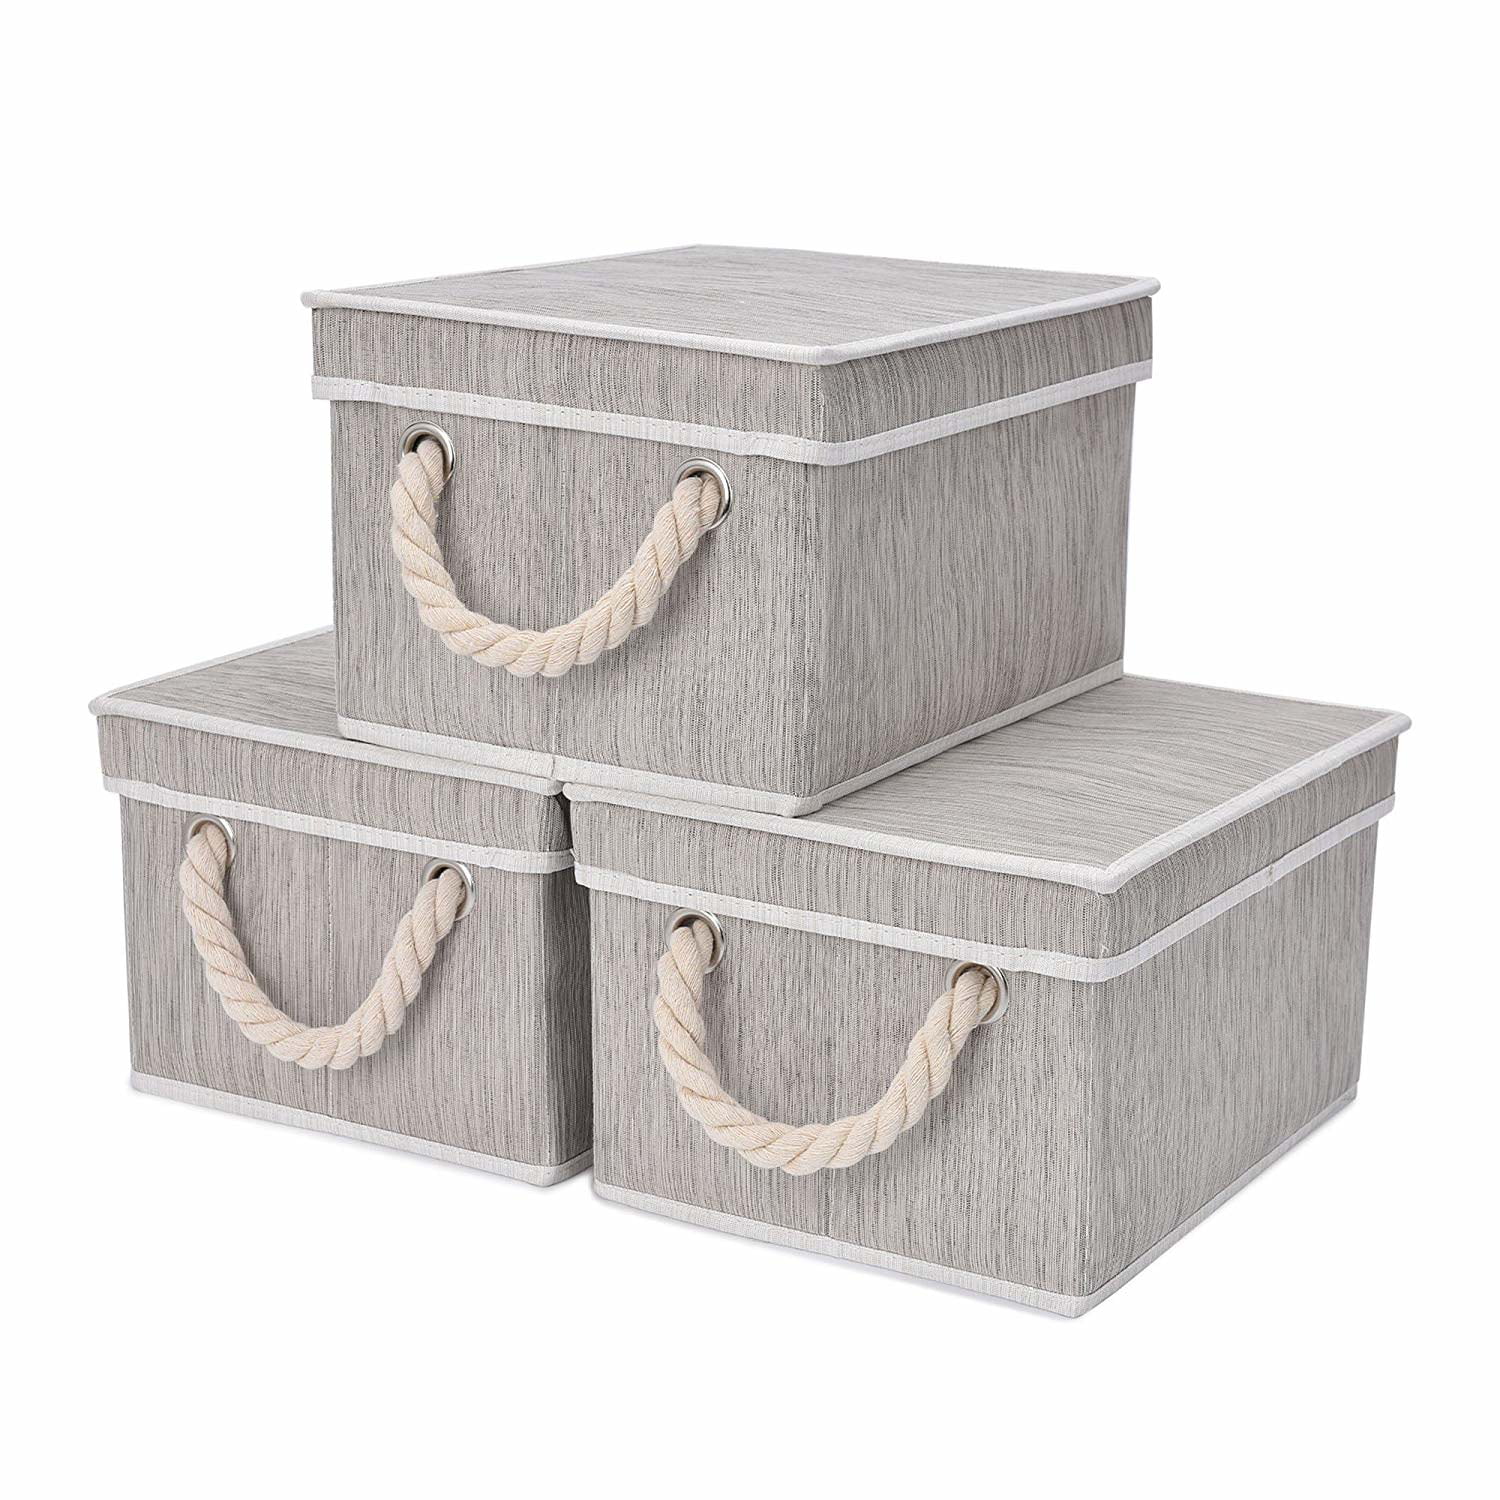 3-Pack Medium Rectangle Decorative Storage Baskets StorageWorks Closet Storage Bins with Cotton Rope Handles Gray